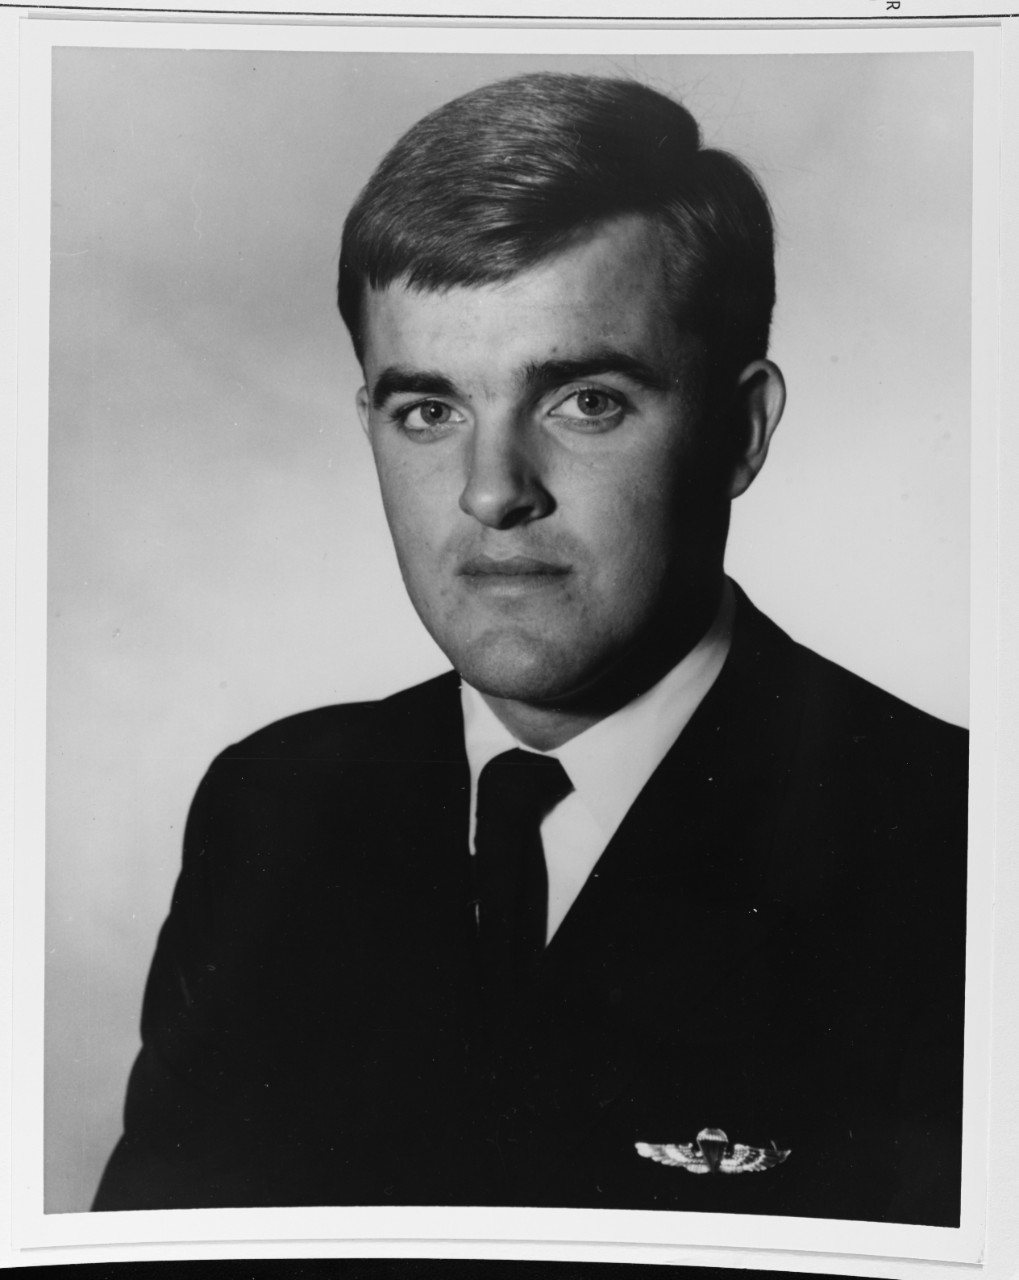 Lieutenant Junior Grade Joseph R. Kerrey, USNR